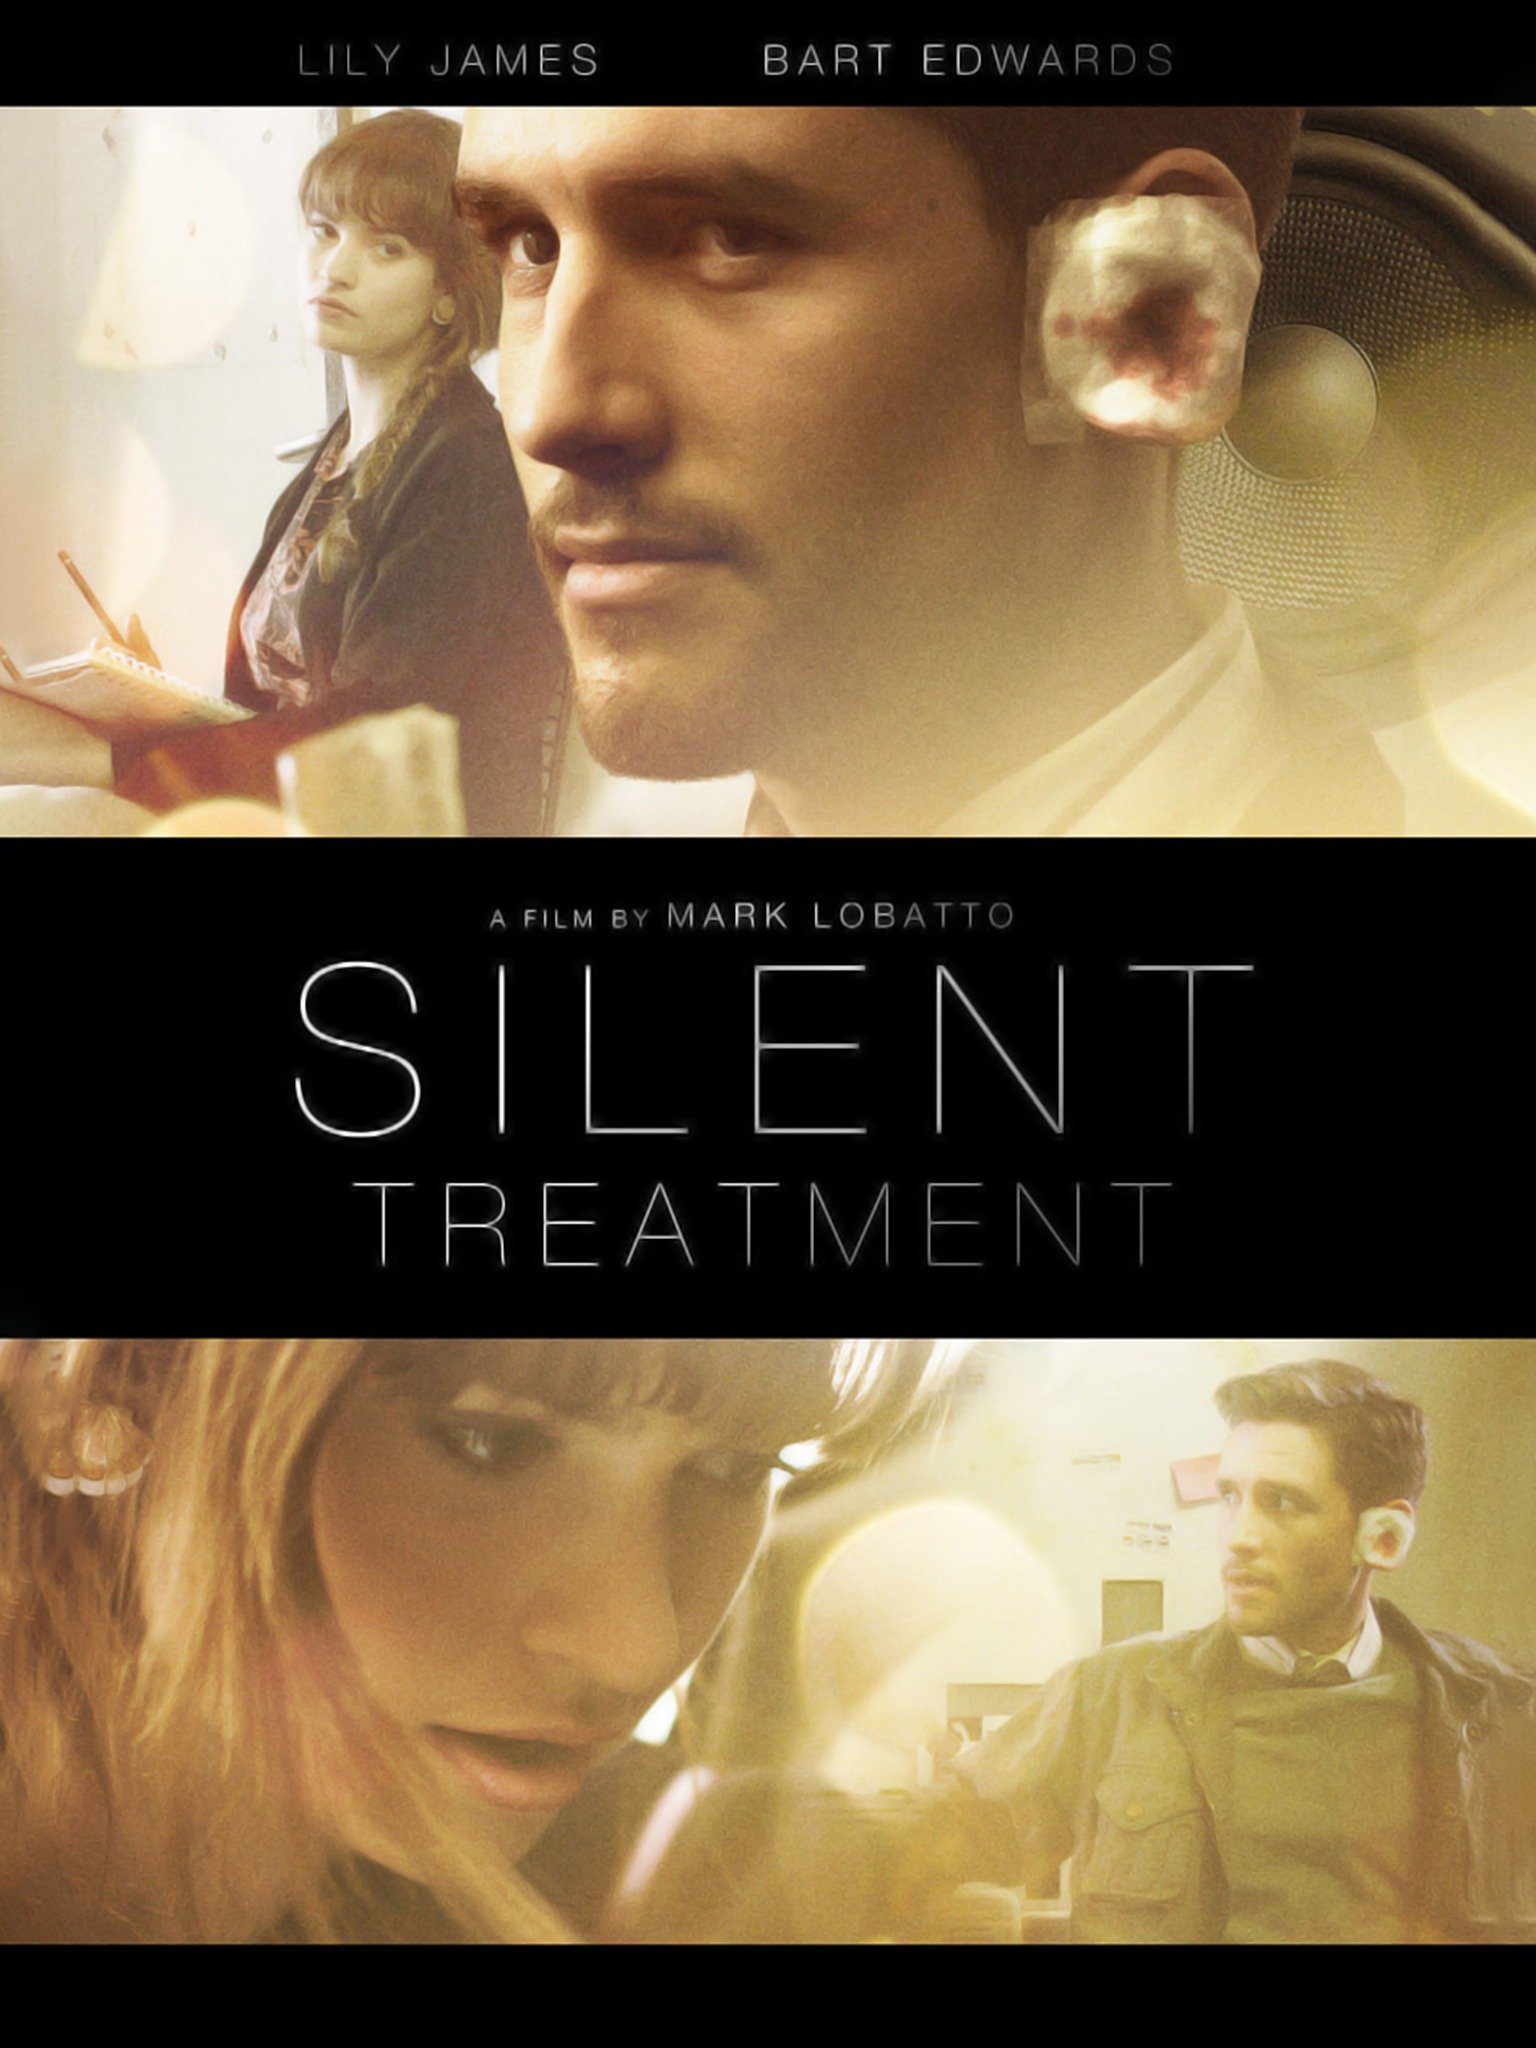 The Silent Treatment by Melanie Surani